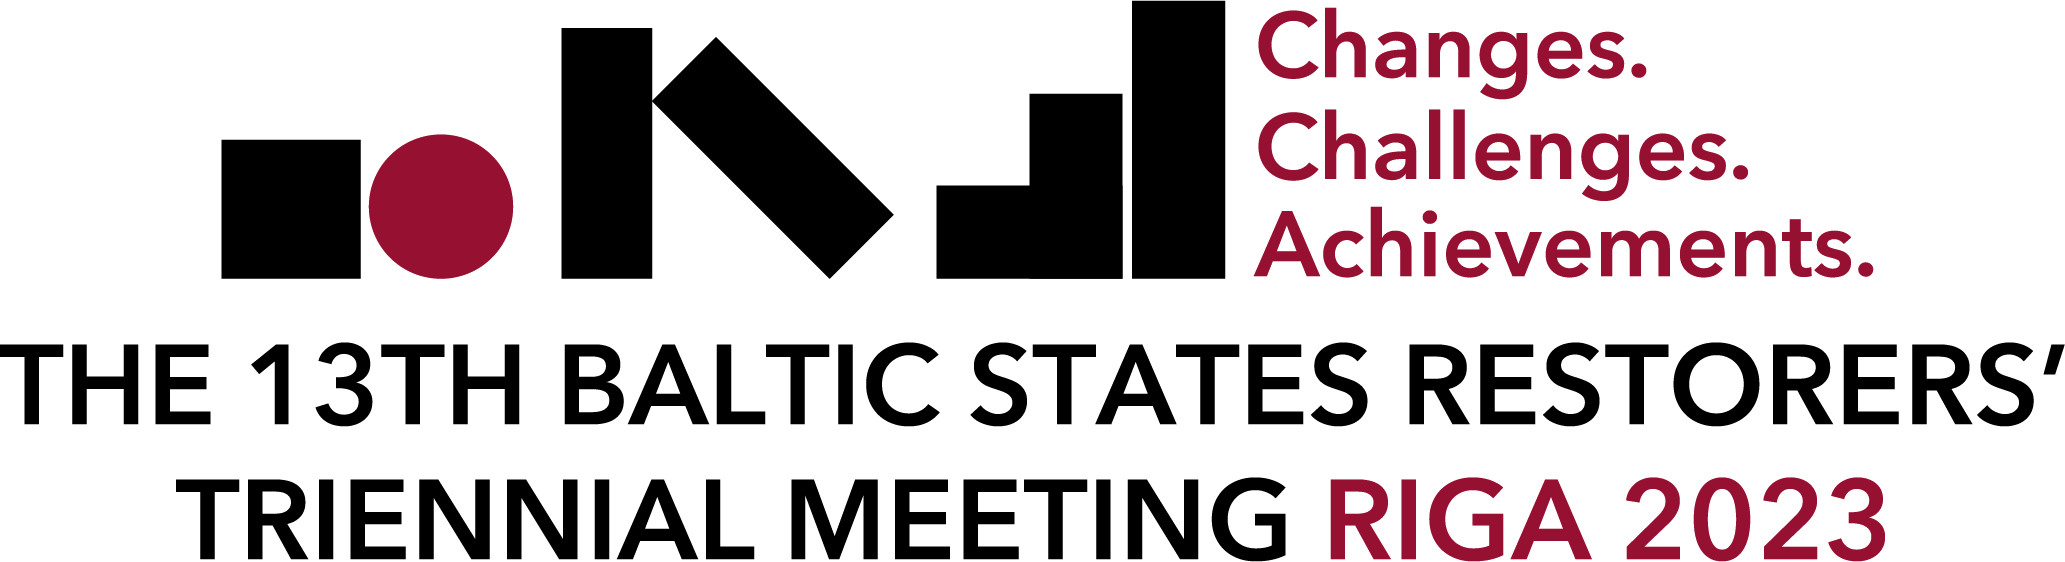 13th Baltic States Restorers Triennial Meeting